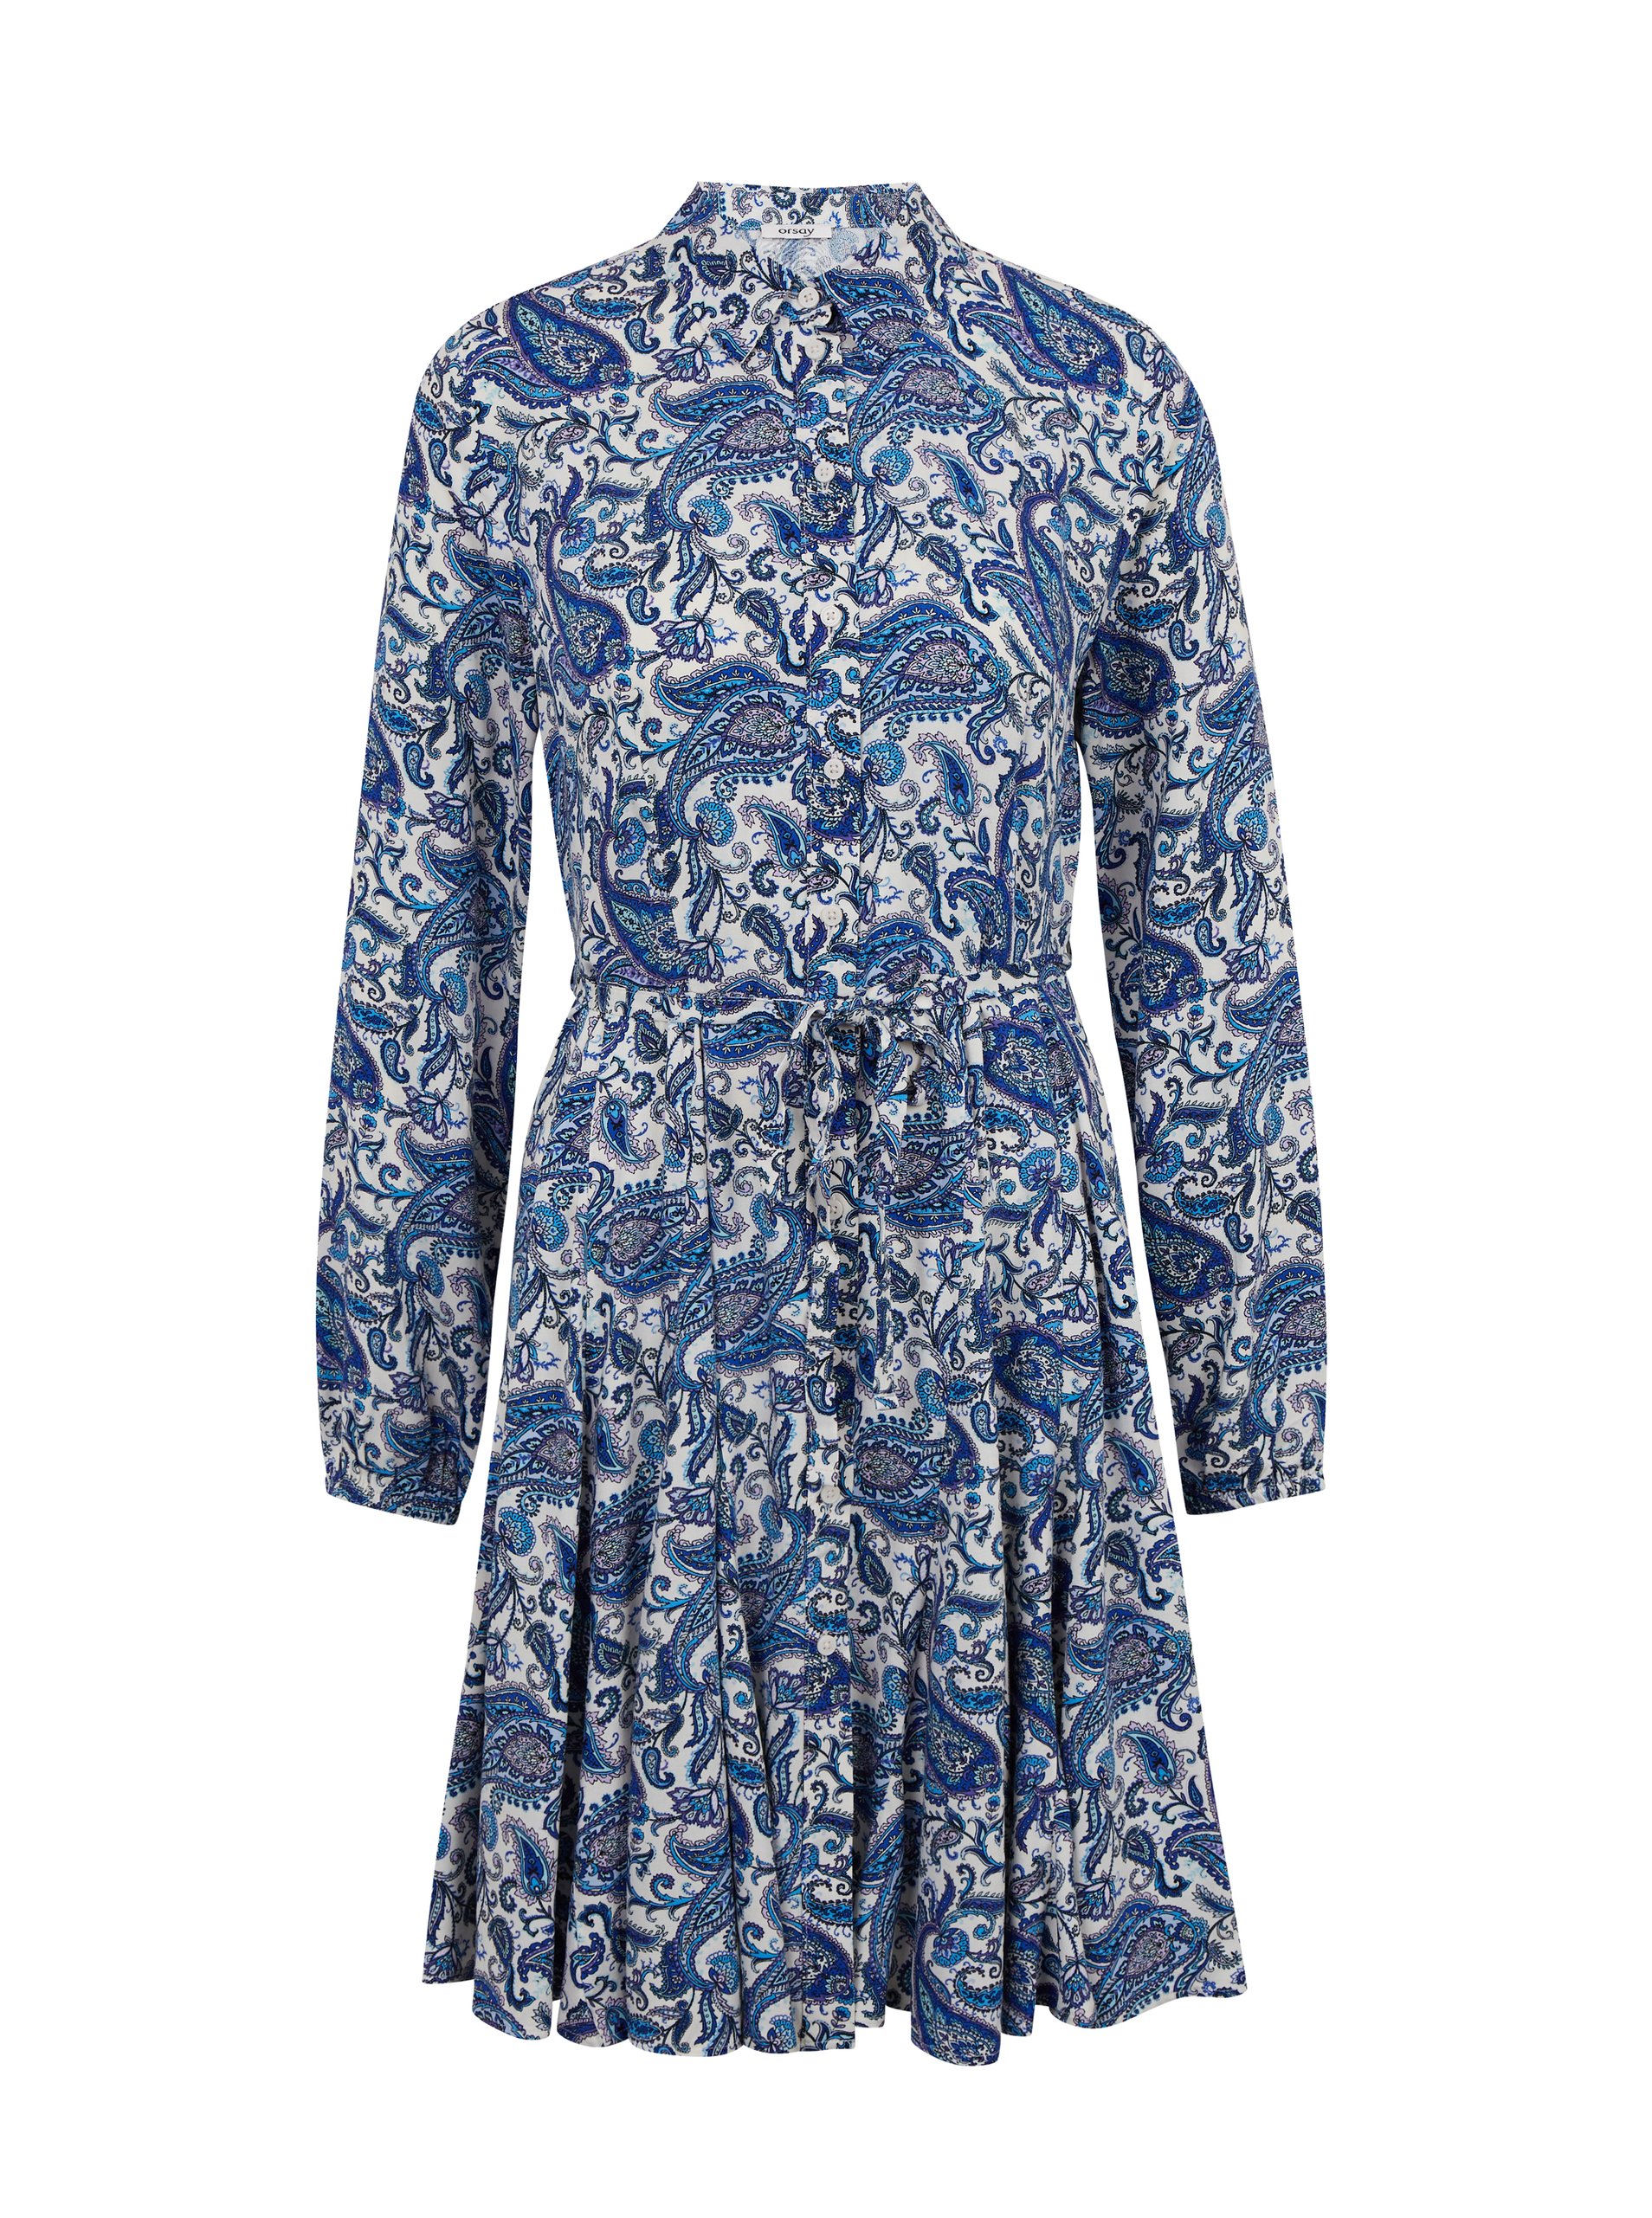 Modré dámské vzorované šaty ORSAY